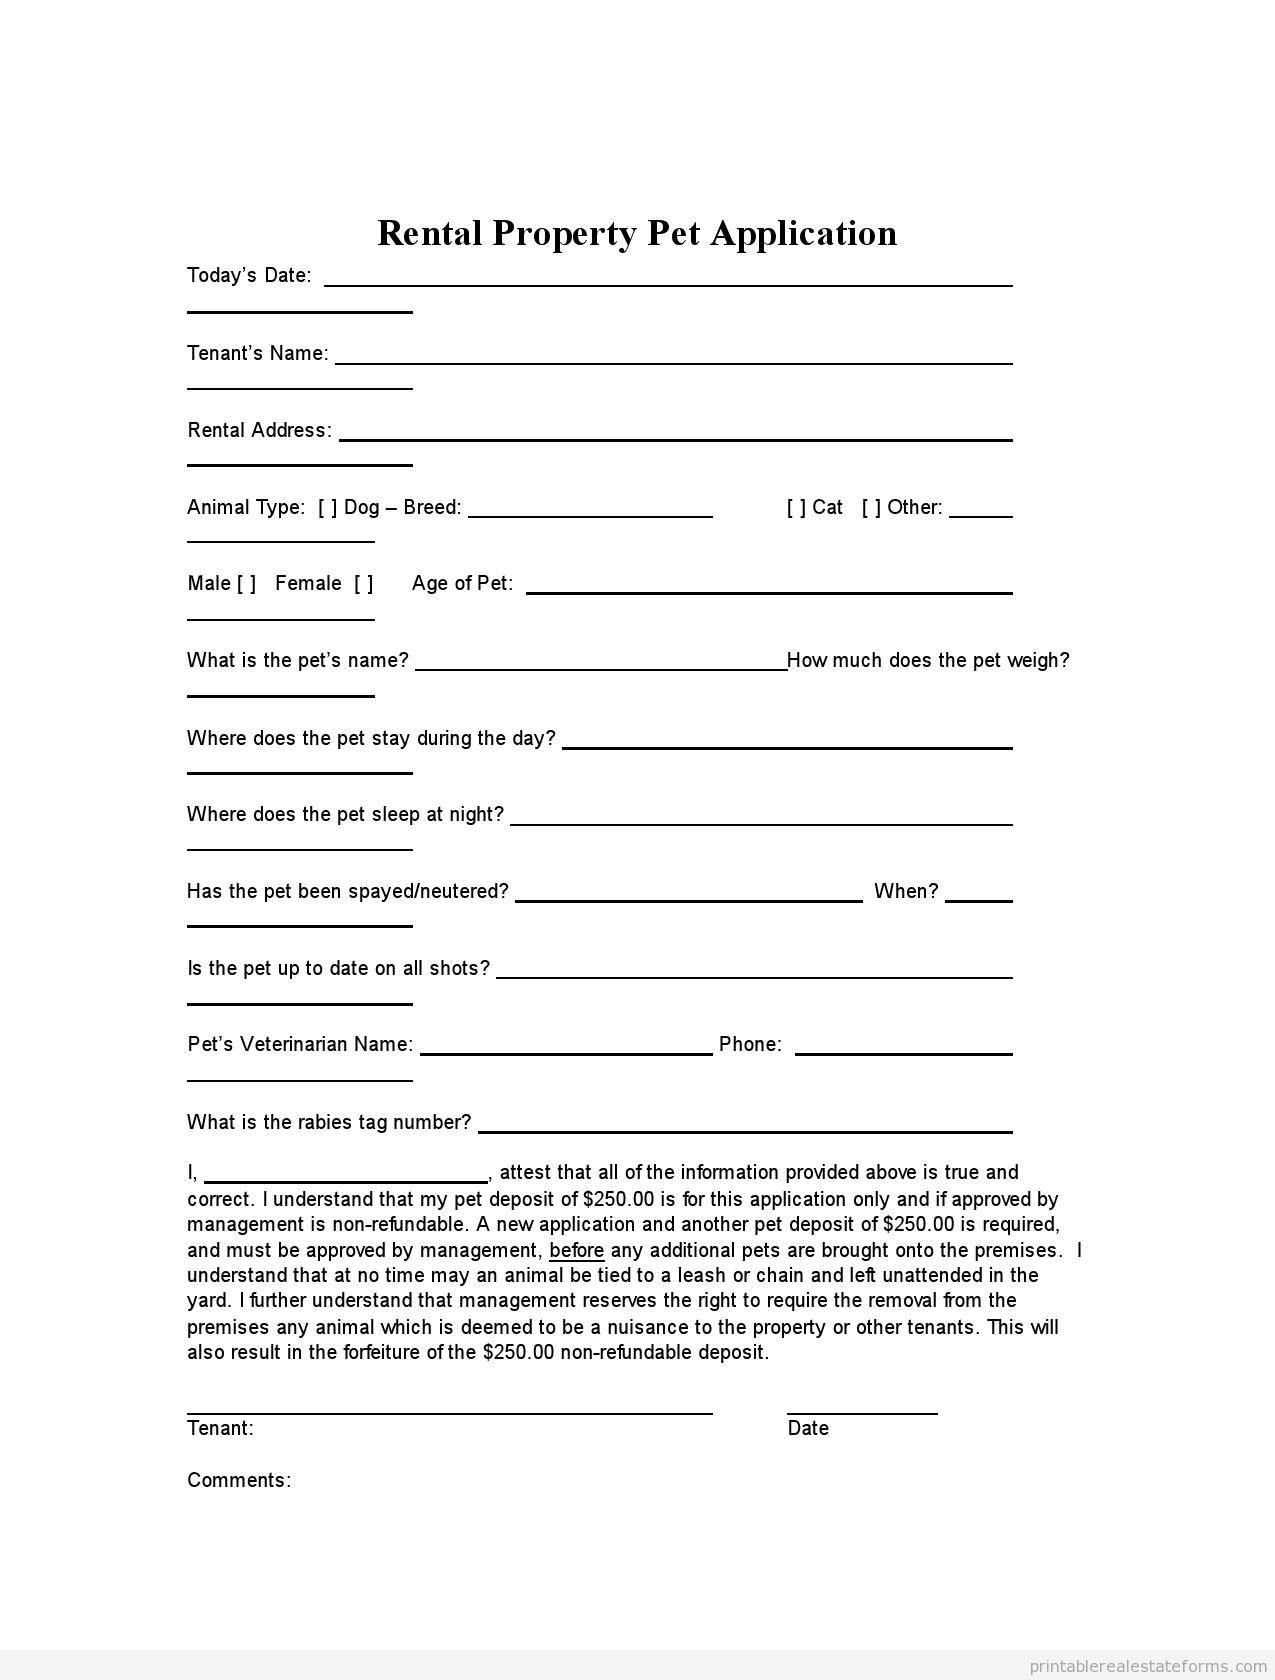 Rental Property Pet Application0001